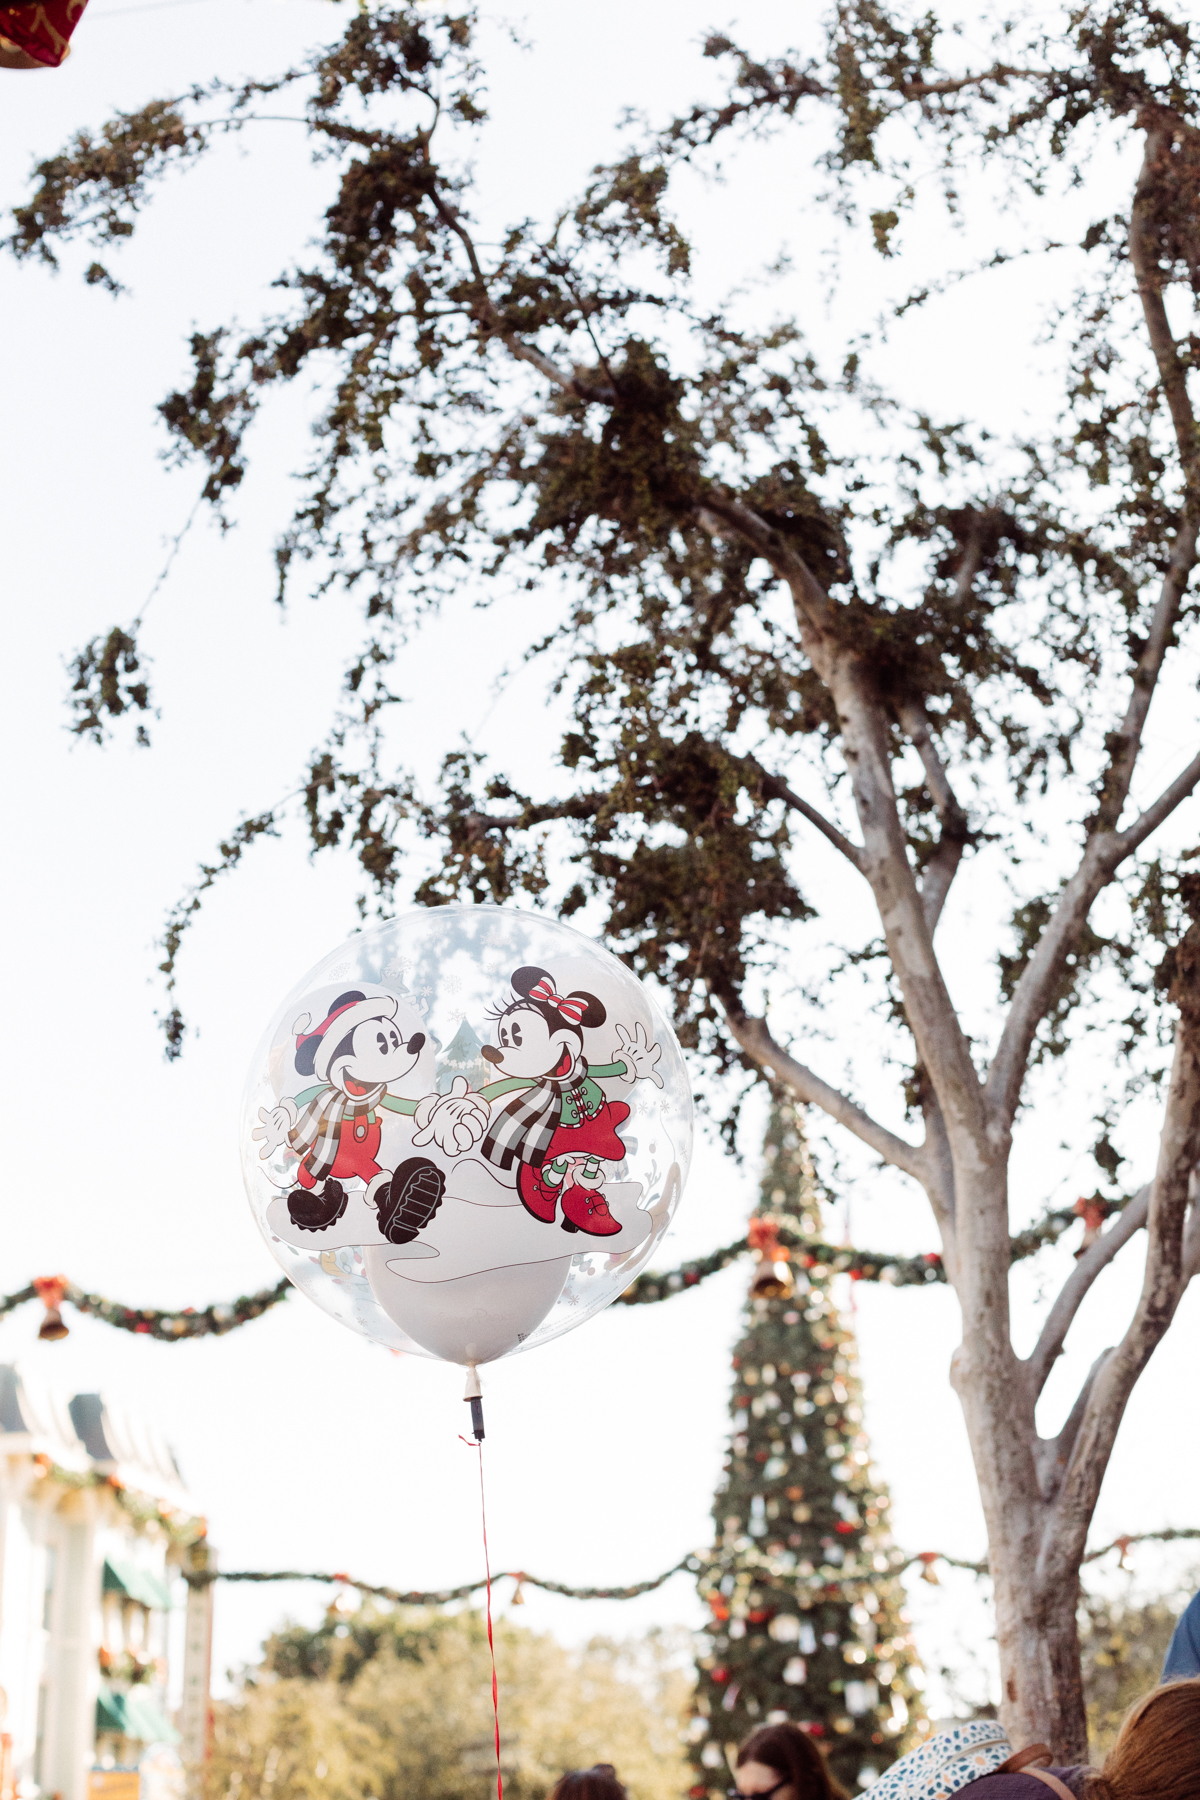 eatsleepwear kimberly lapides The holidays at Disneyland Resort and the holiday mickey mouse balloon